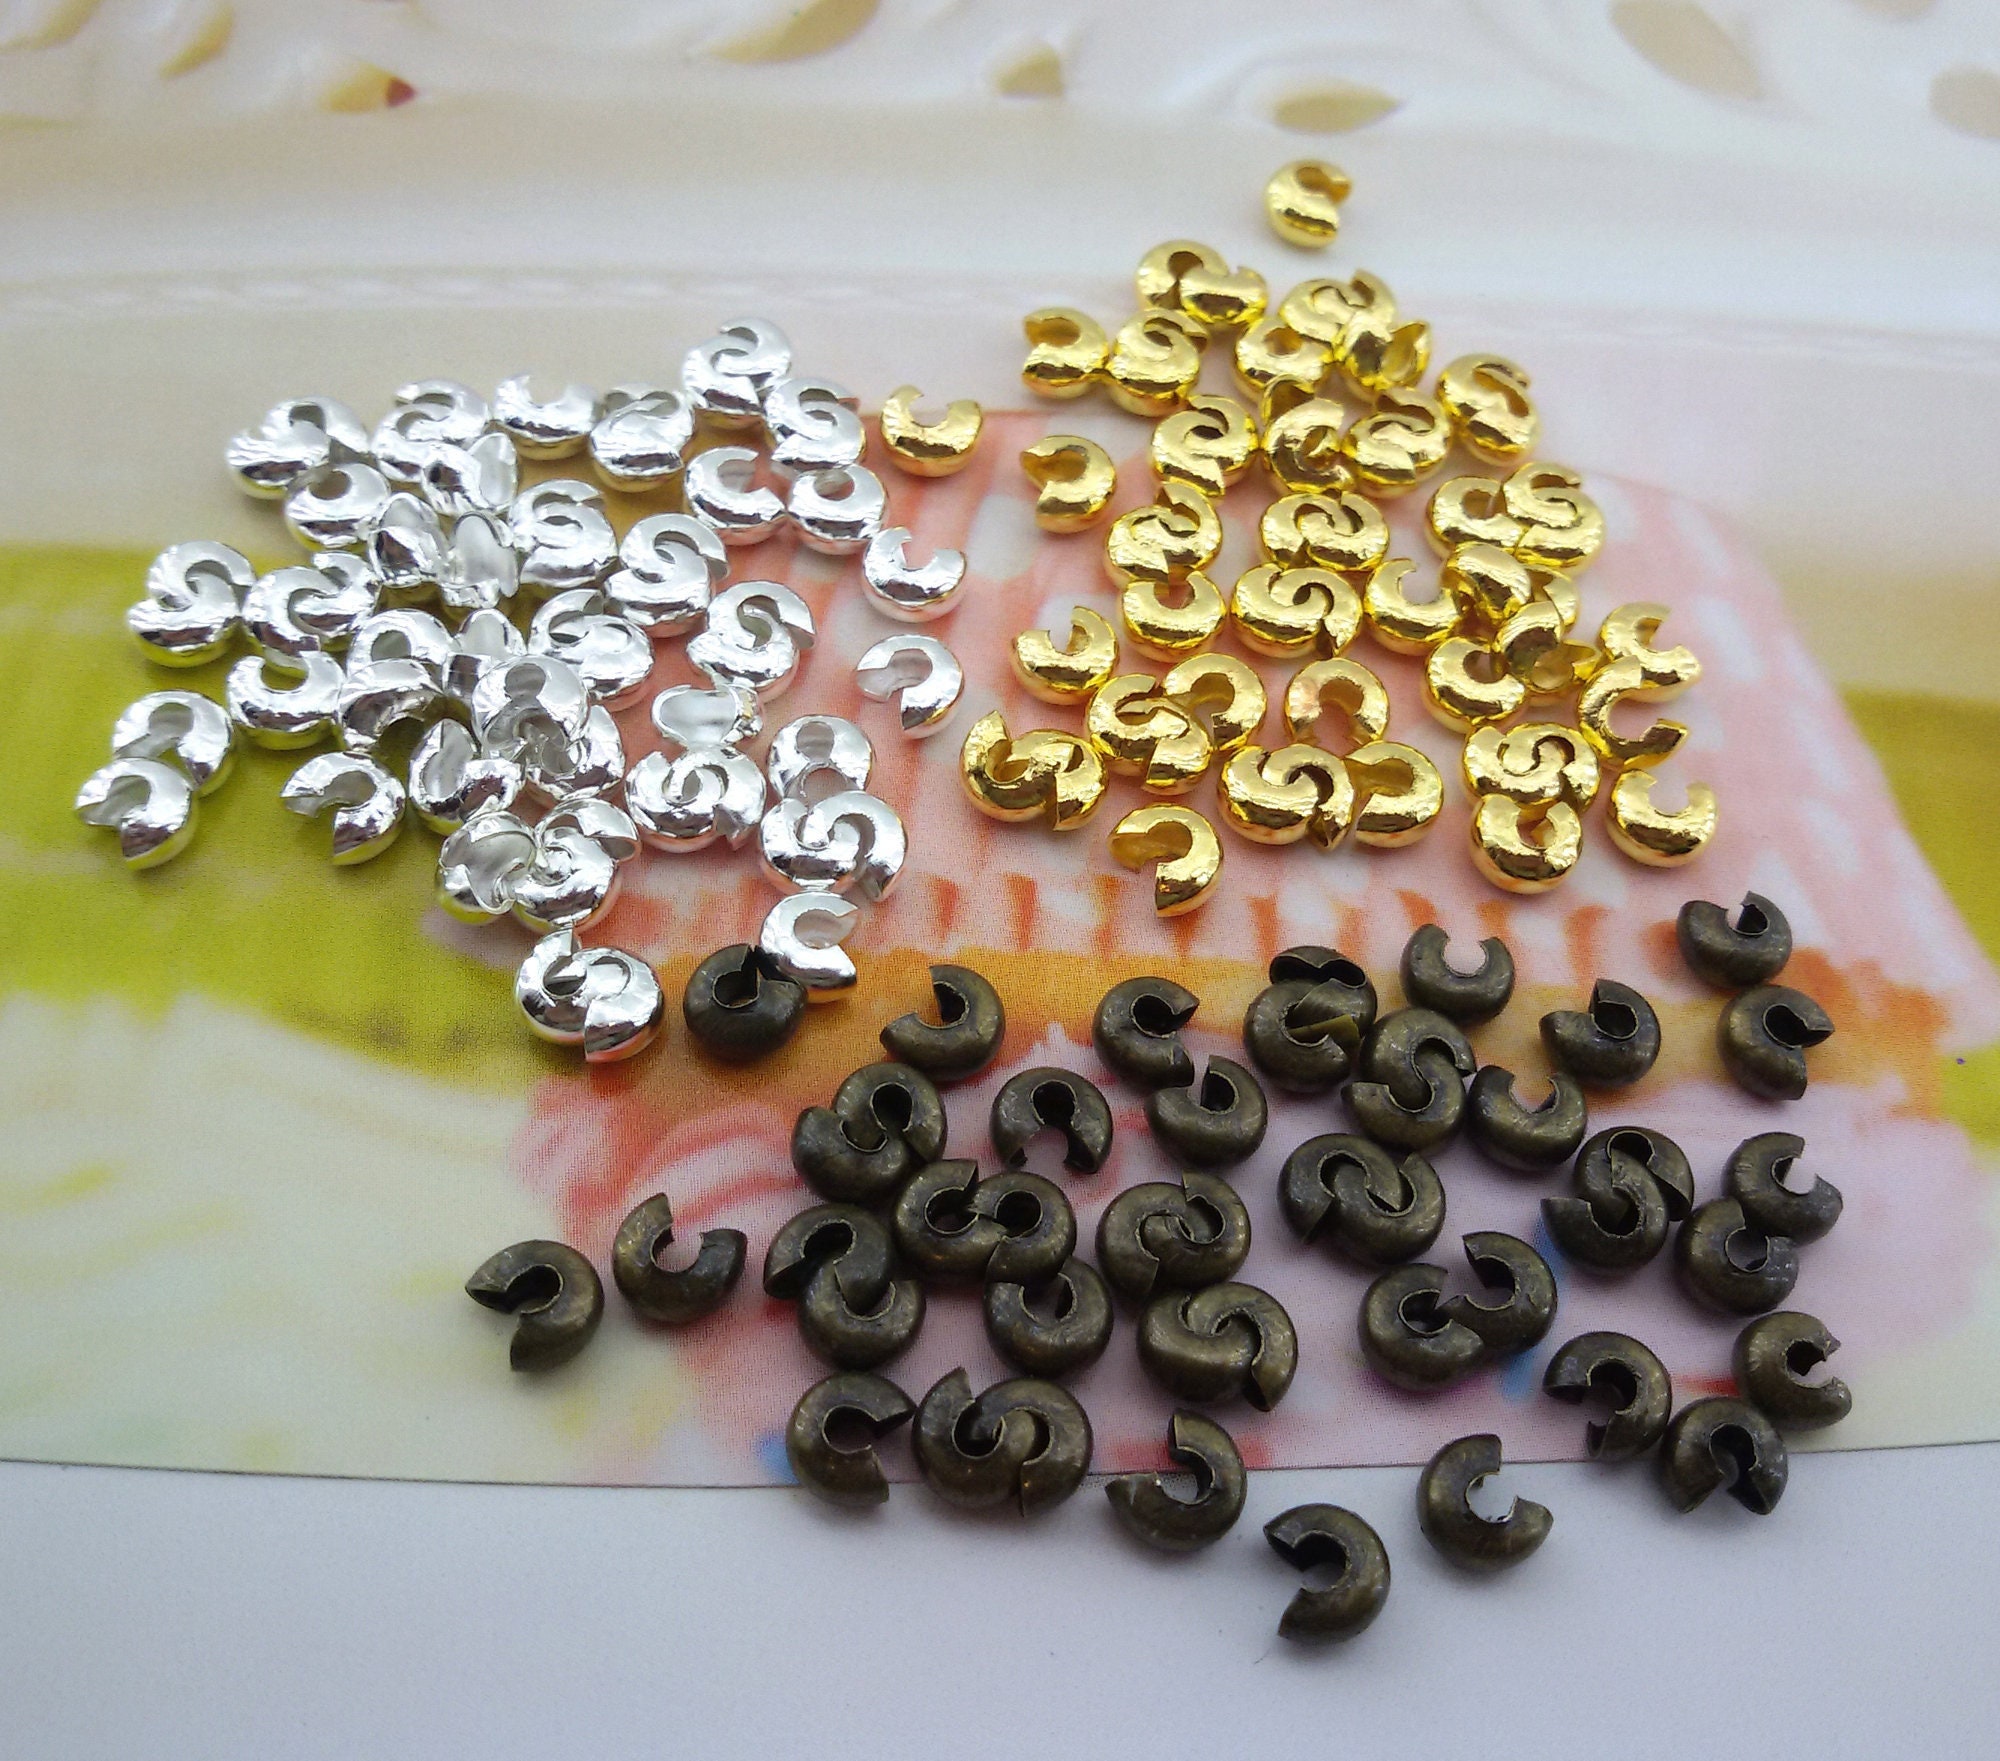 Carbon Steel Bead Crimp Tool for DIY Jewelry Making, Crimp Beads